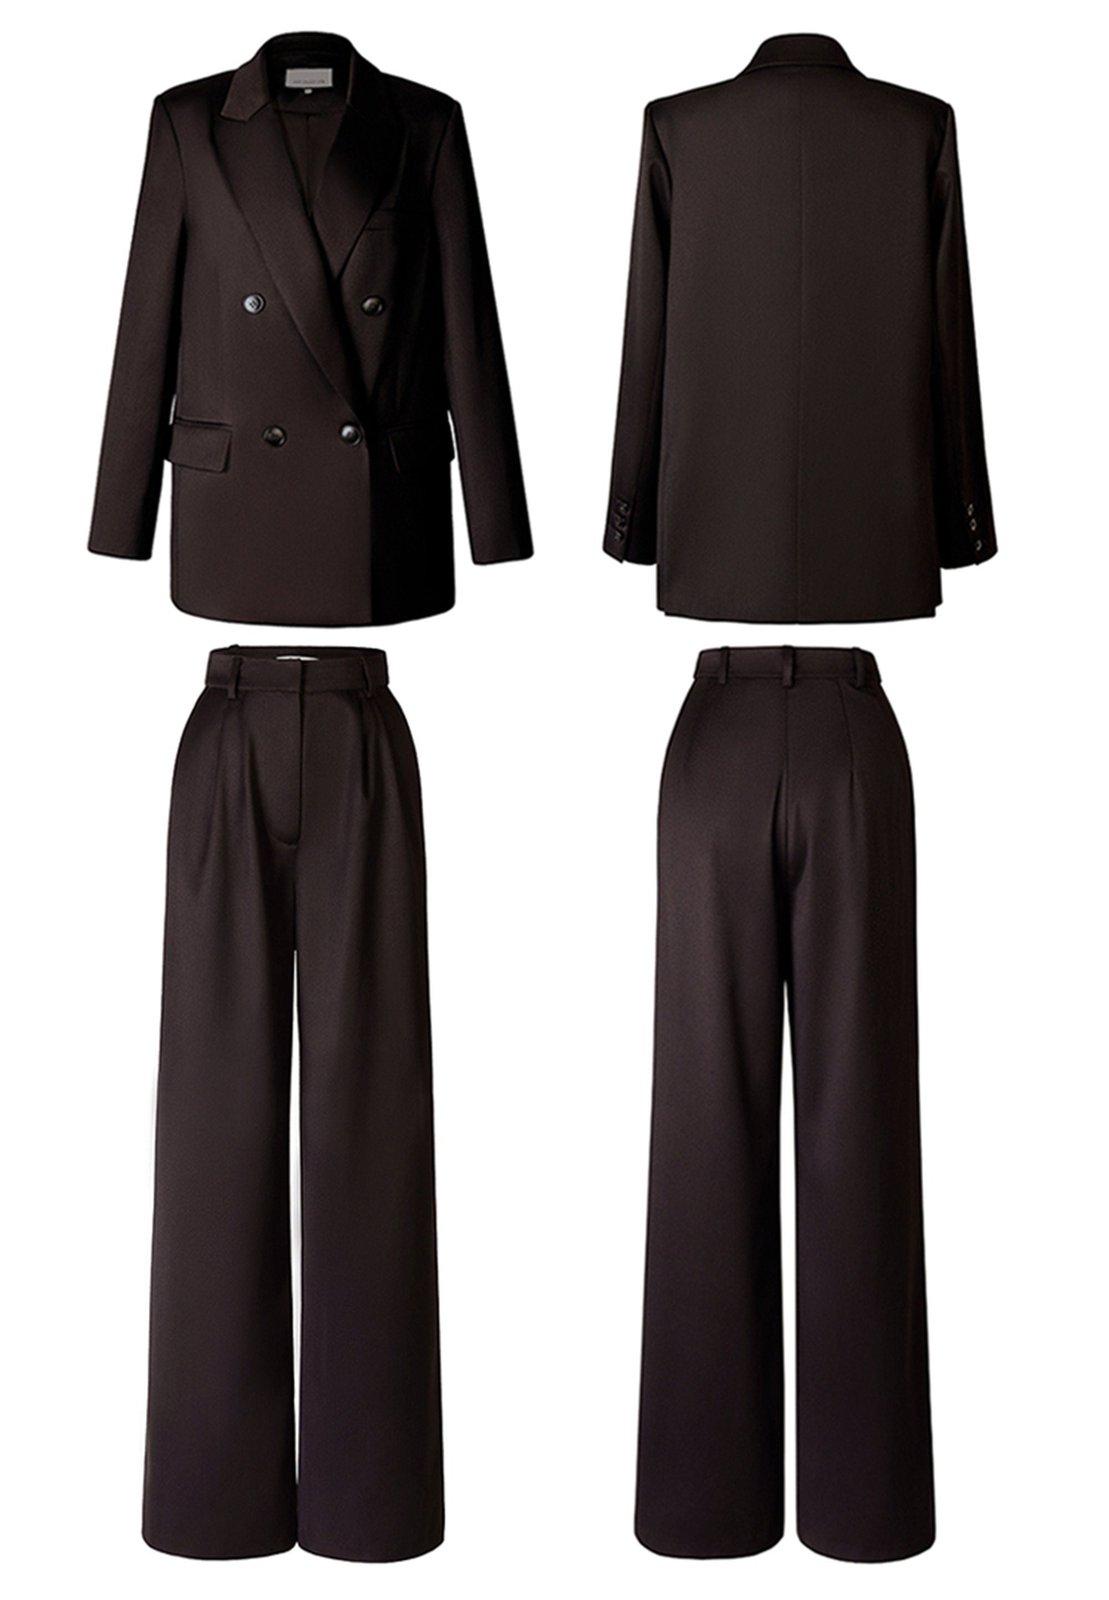 Buy YUNCLOS Women's Elegant Business 2 Piece Office Lady Suit Set Work  Blazer Pant (Suit Set-Dark Grey, XXL) at Amazon.in